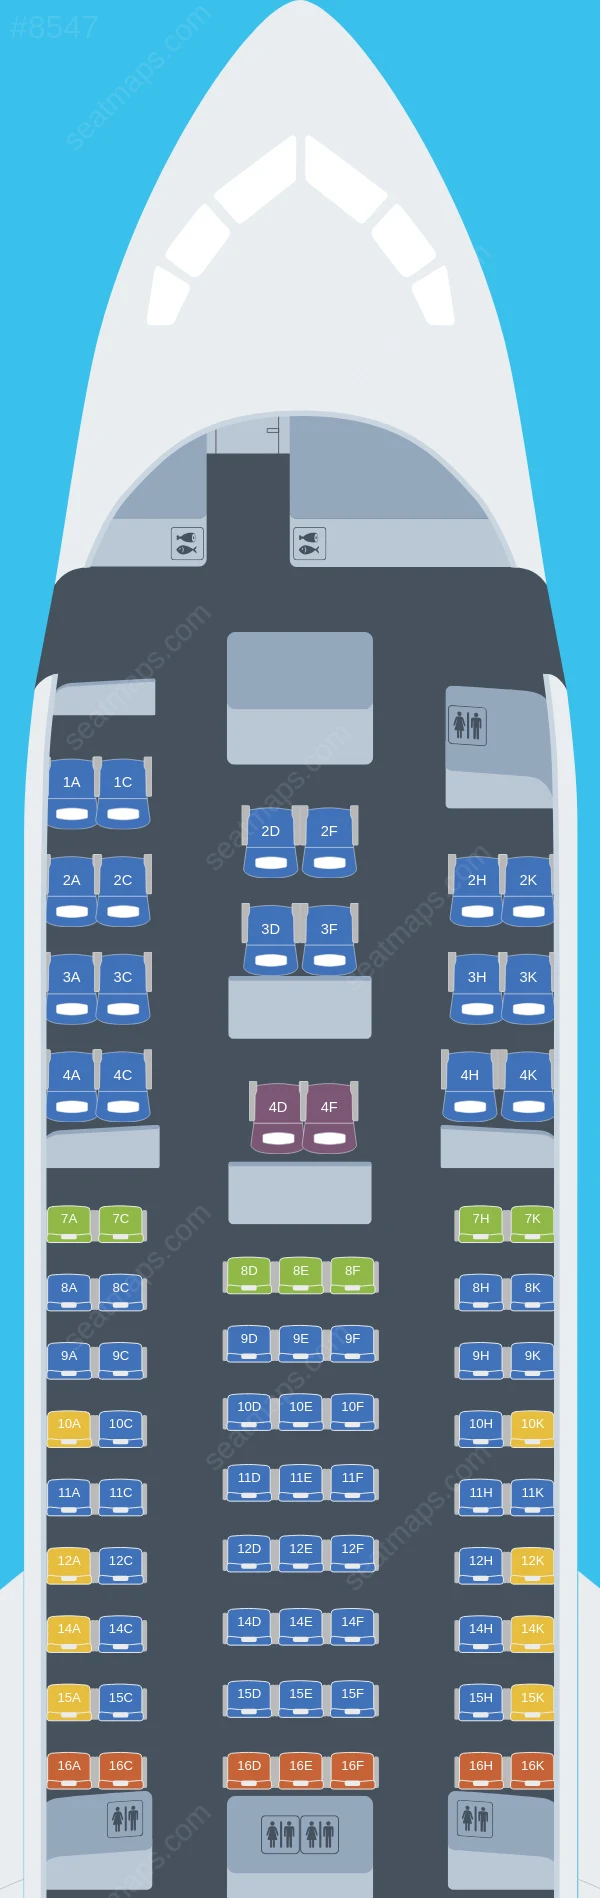 Omni Air International Boeing 767-200ER V.2 seatmap preview